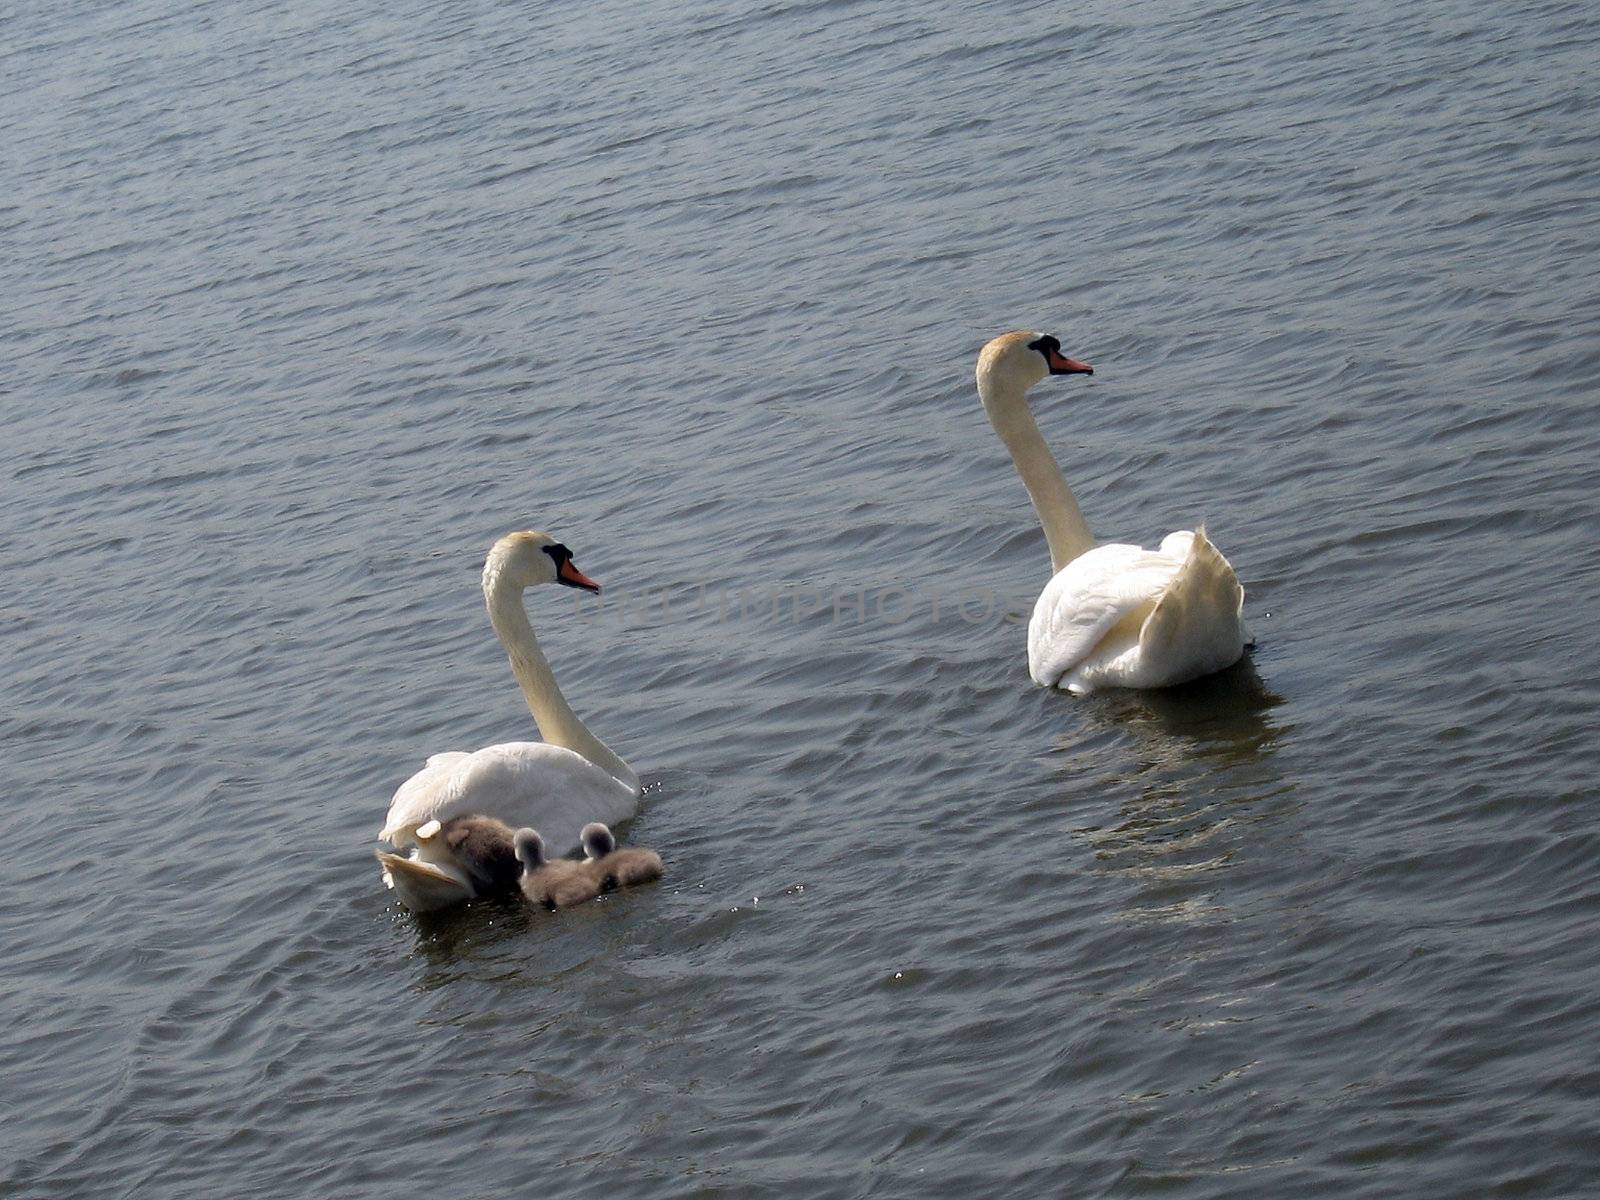 happy monogynopaedium of swans with three nestling on a lake